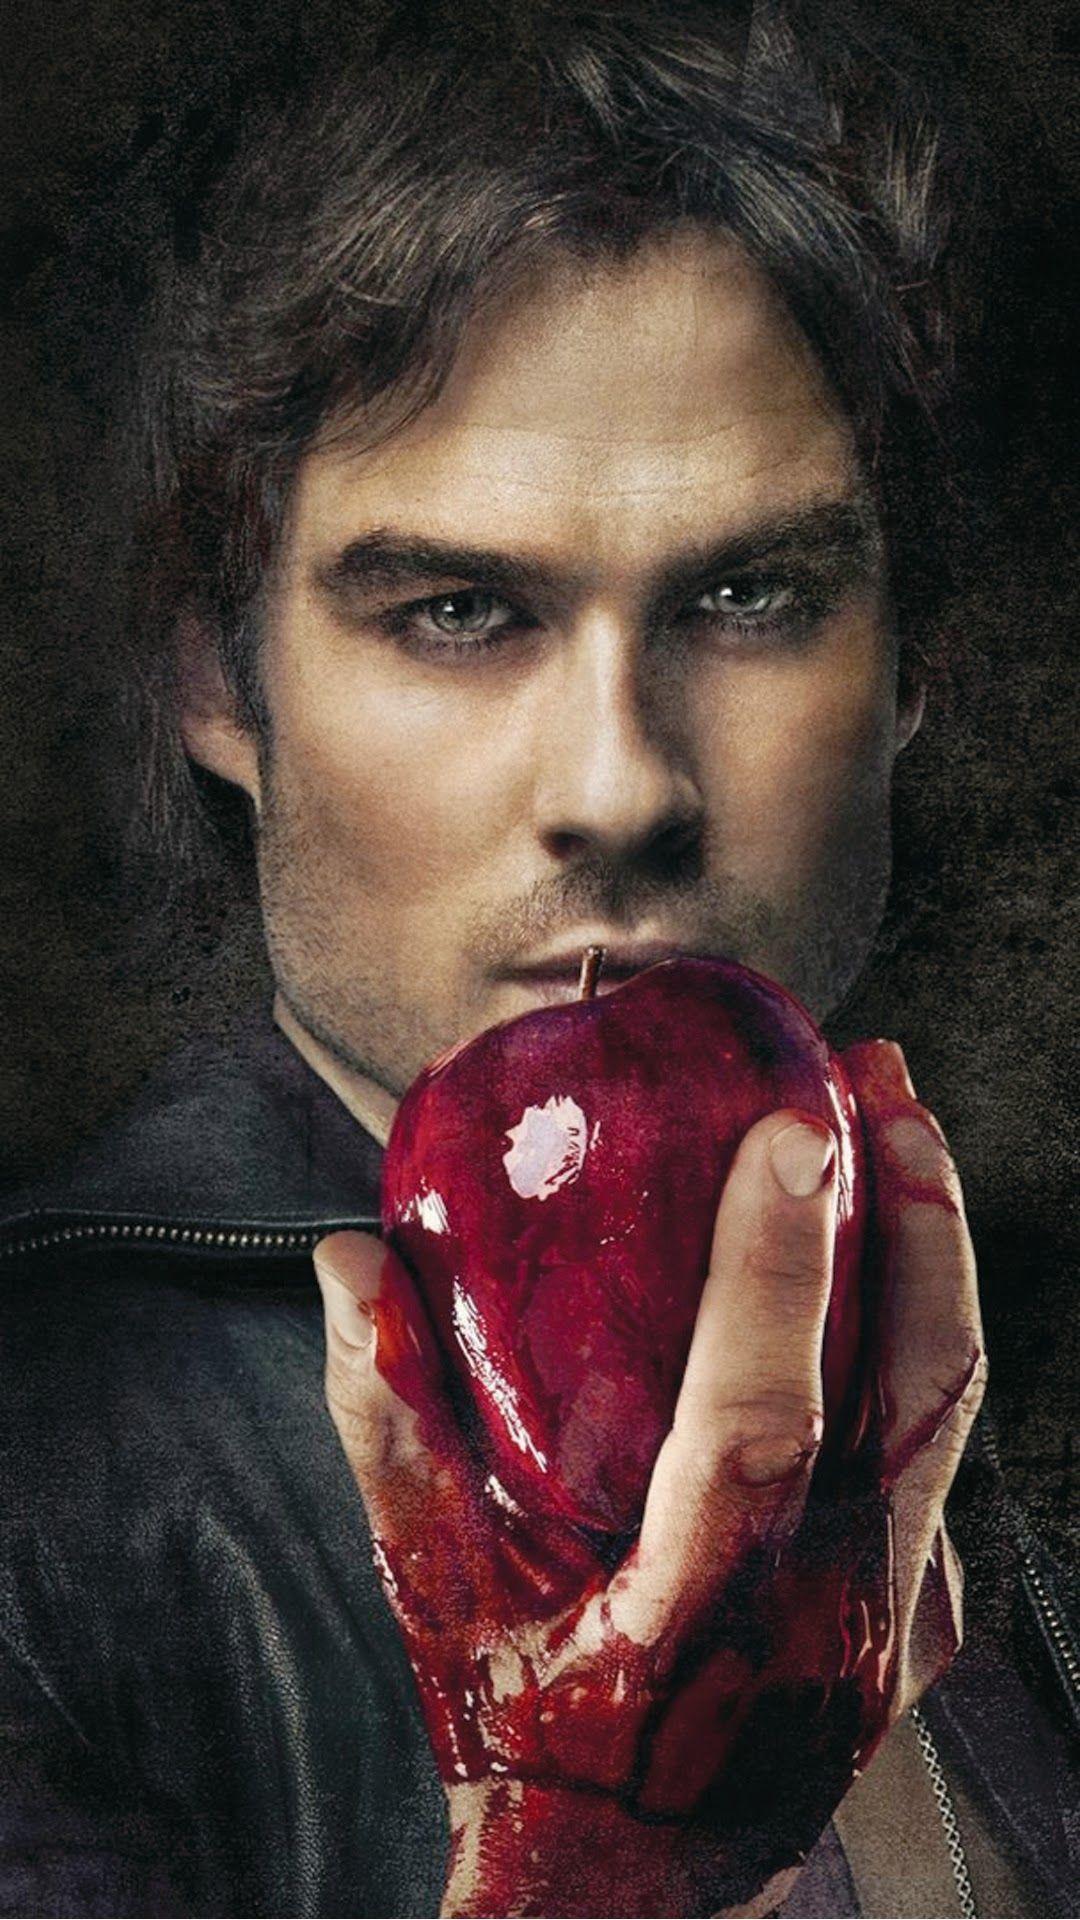 Damon Salvatore Ian Somerhalder Vampire Diaries Android Wallpaper